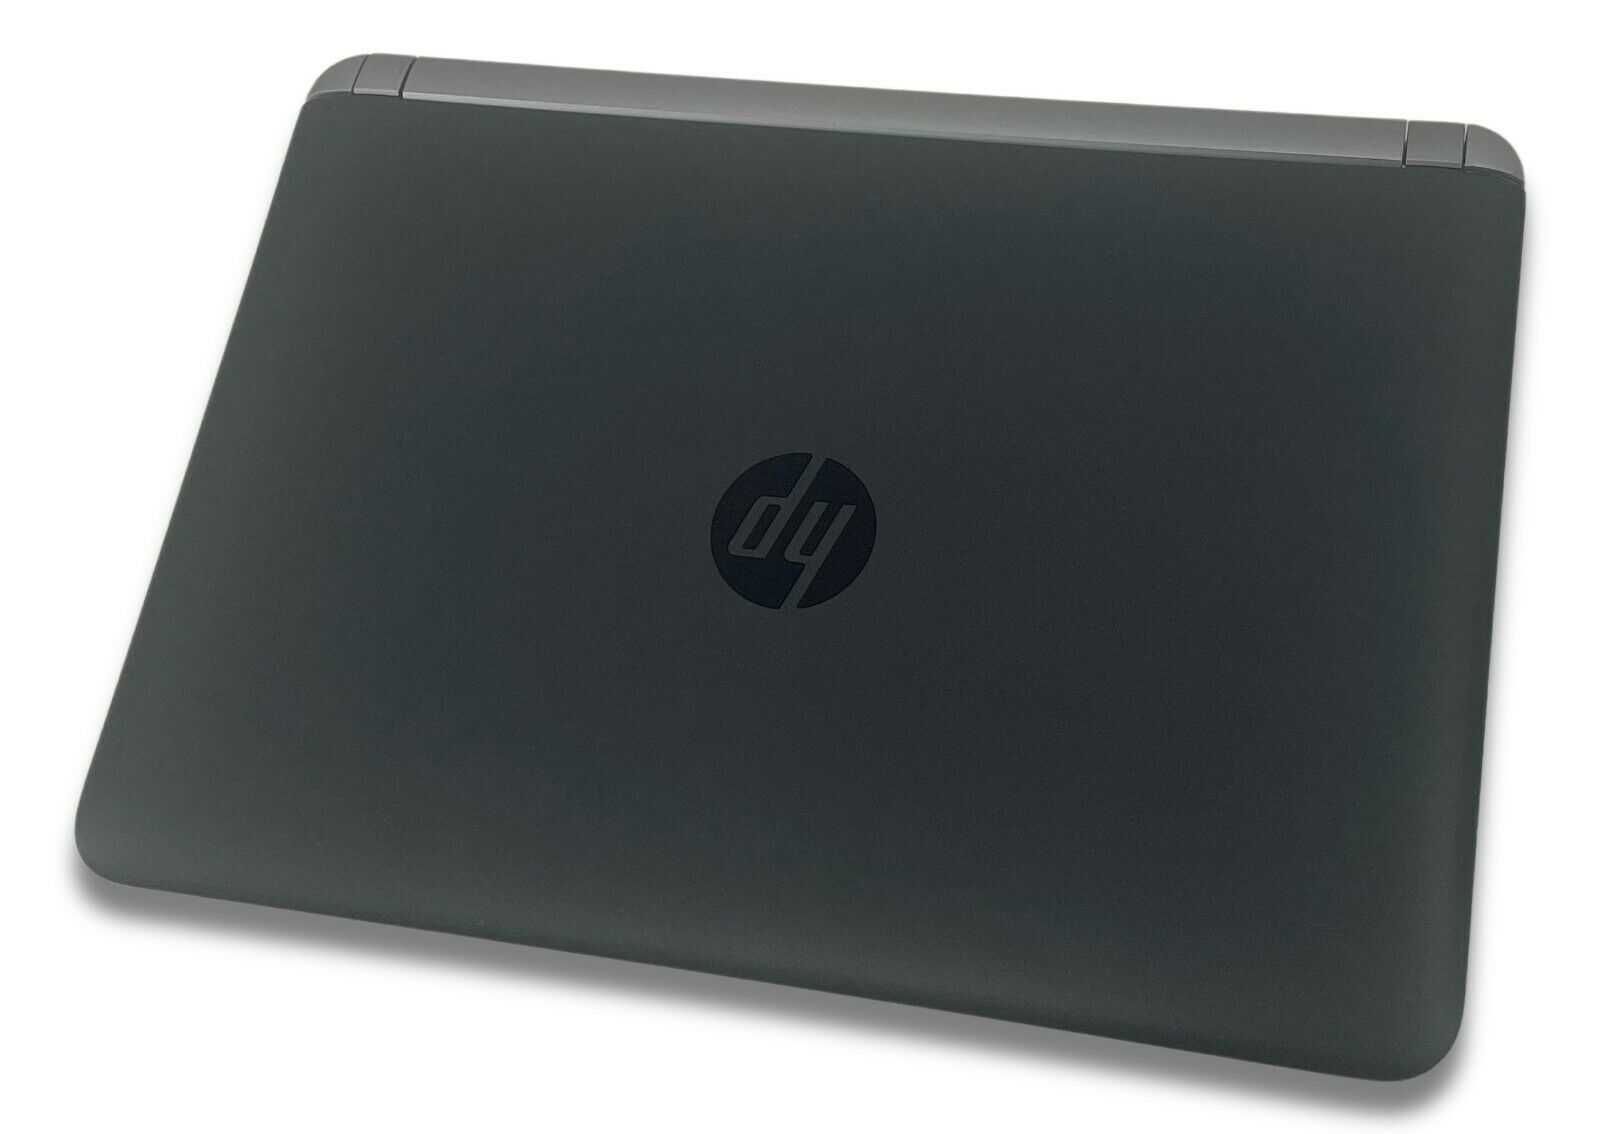 Лаптоп HP 440 G3 I5-6300U 8GB 128GB SSD 14.0 HD Windows 10